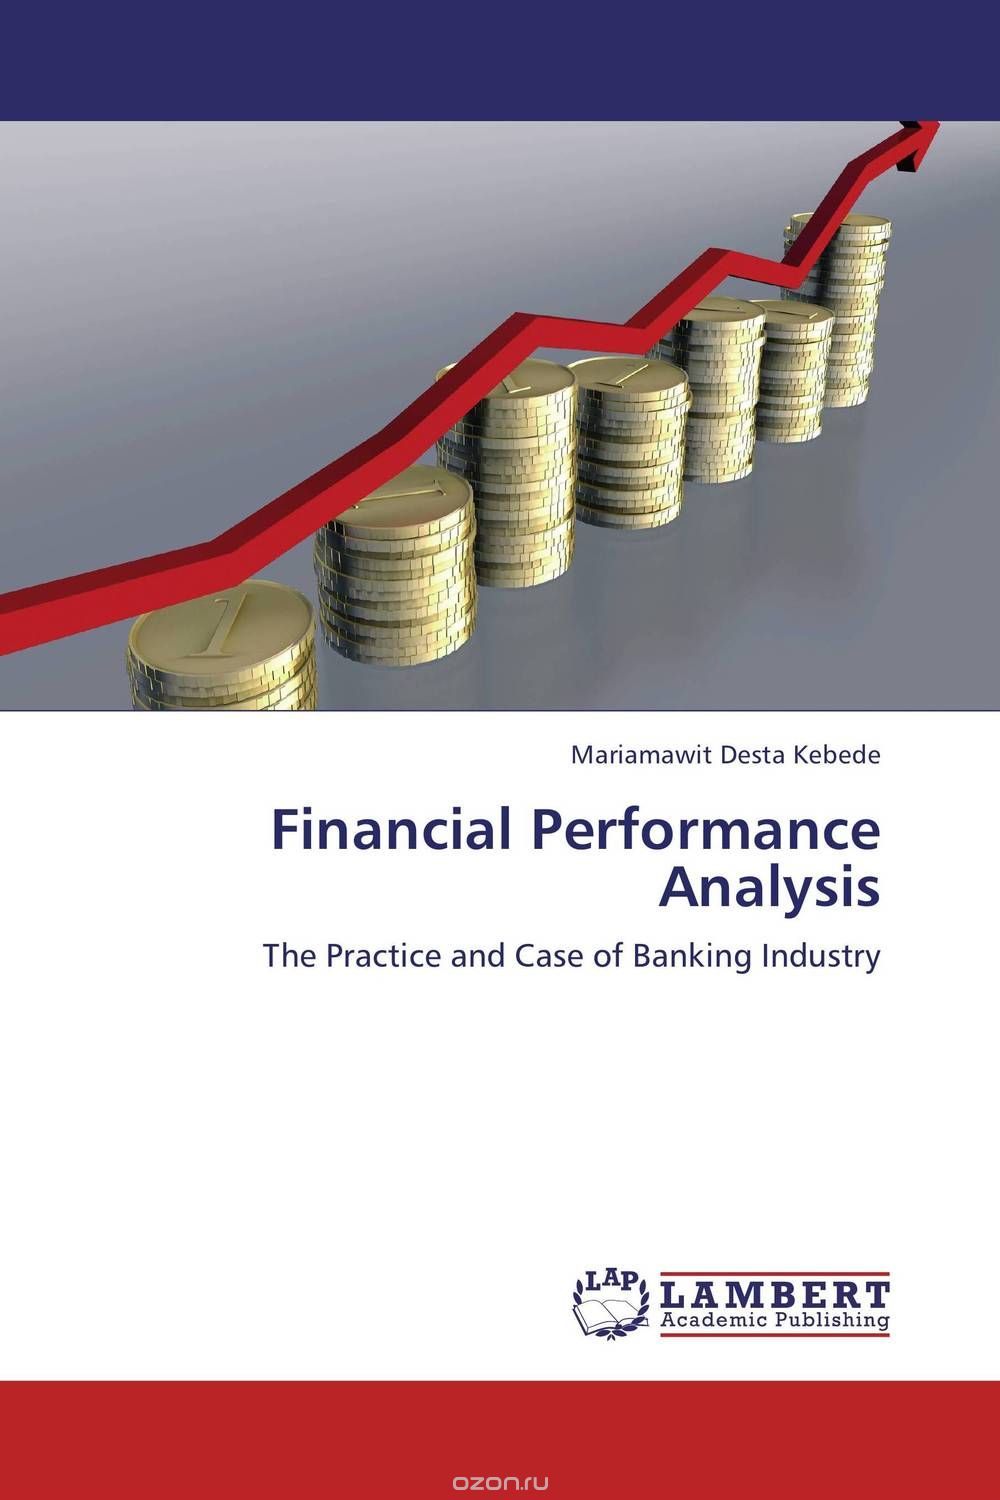 Financial Performance Analysis